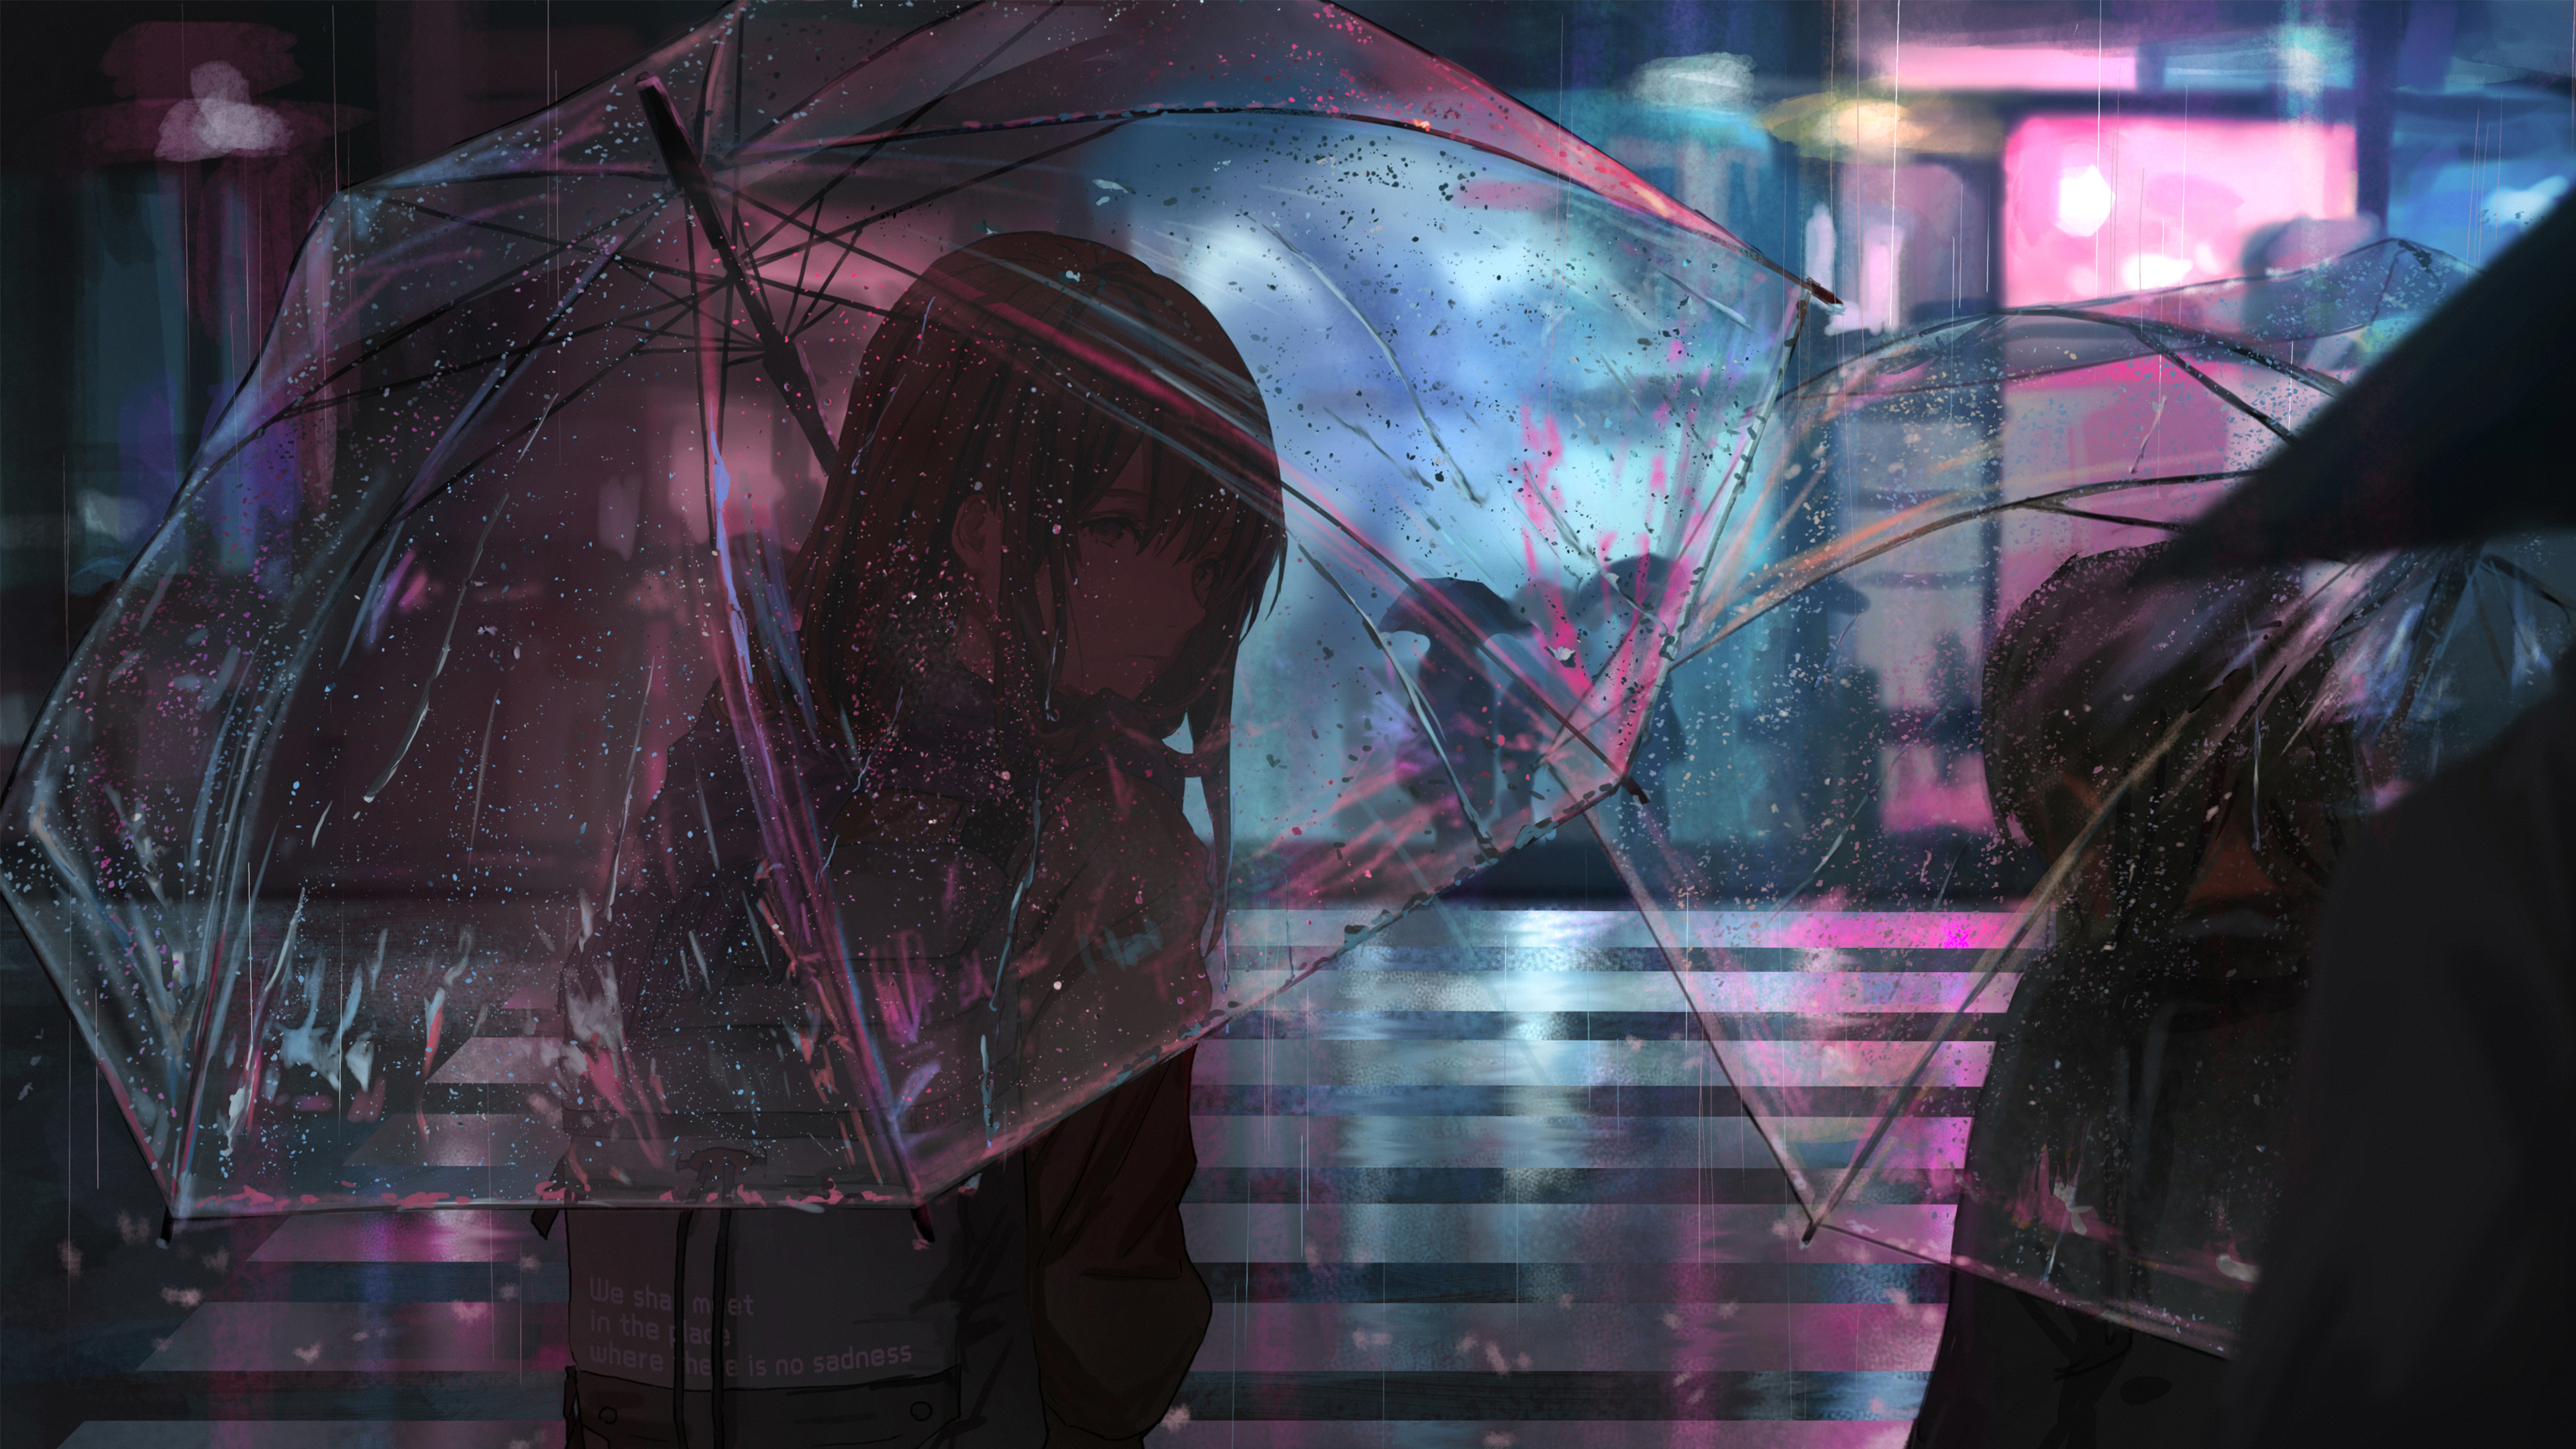 Anime Girl With Umbrella In Rain Wallpaper gambar ke 11